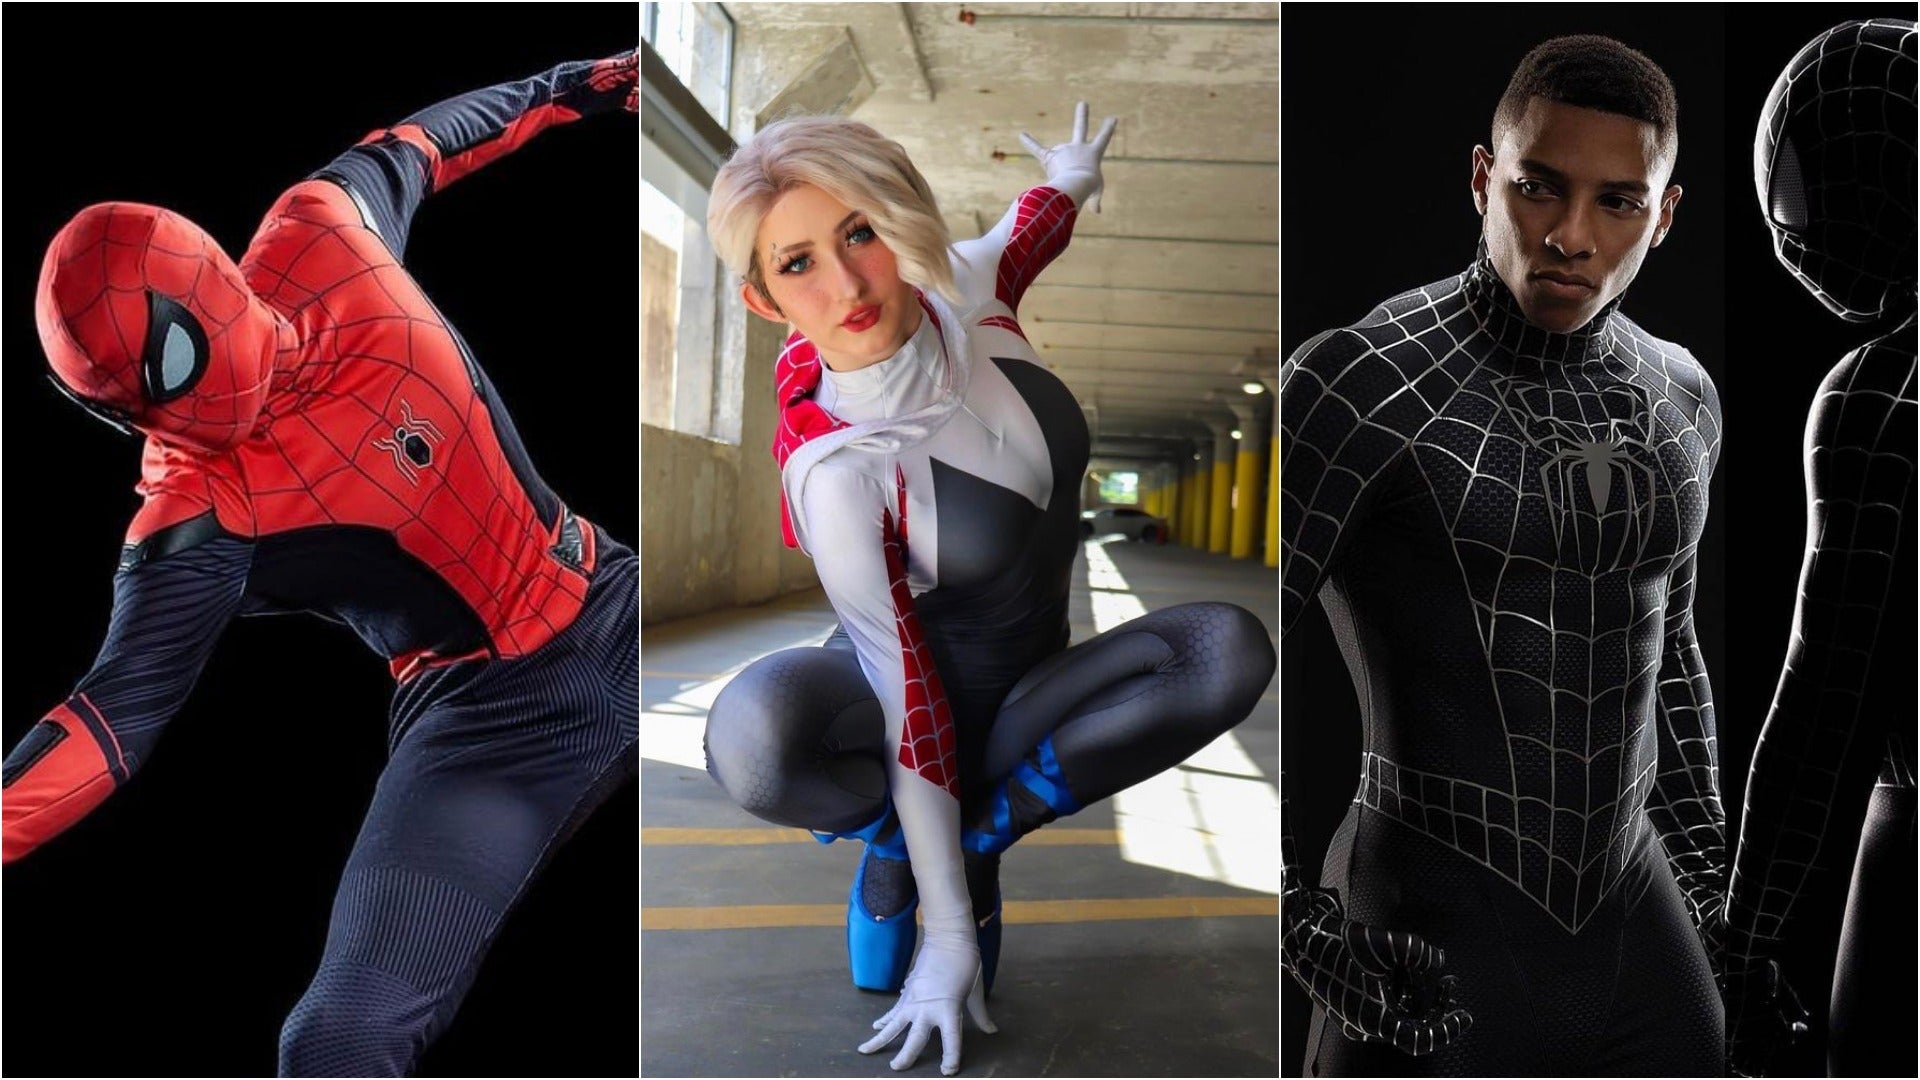 Spiderman | Men dress up as Spider-Man to cheer up kids amid coronavirus  lockdown [PHOTOS] | Trending & Viral News